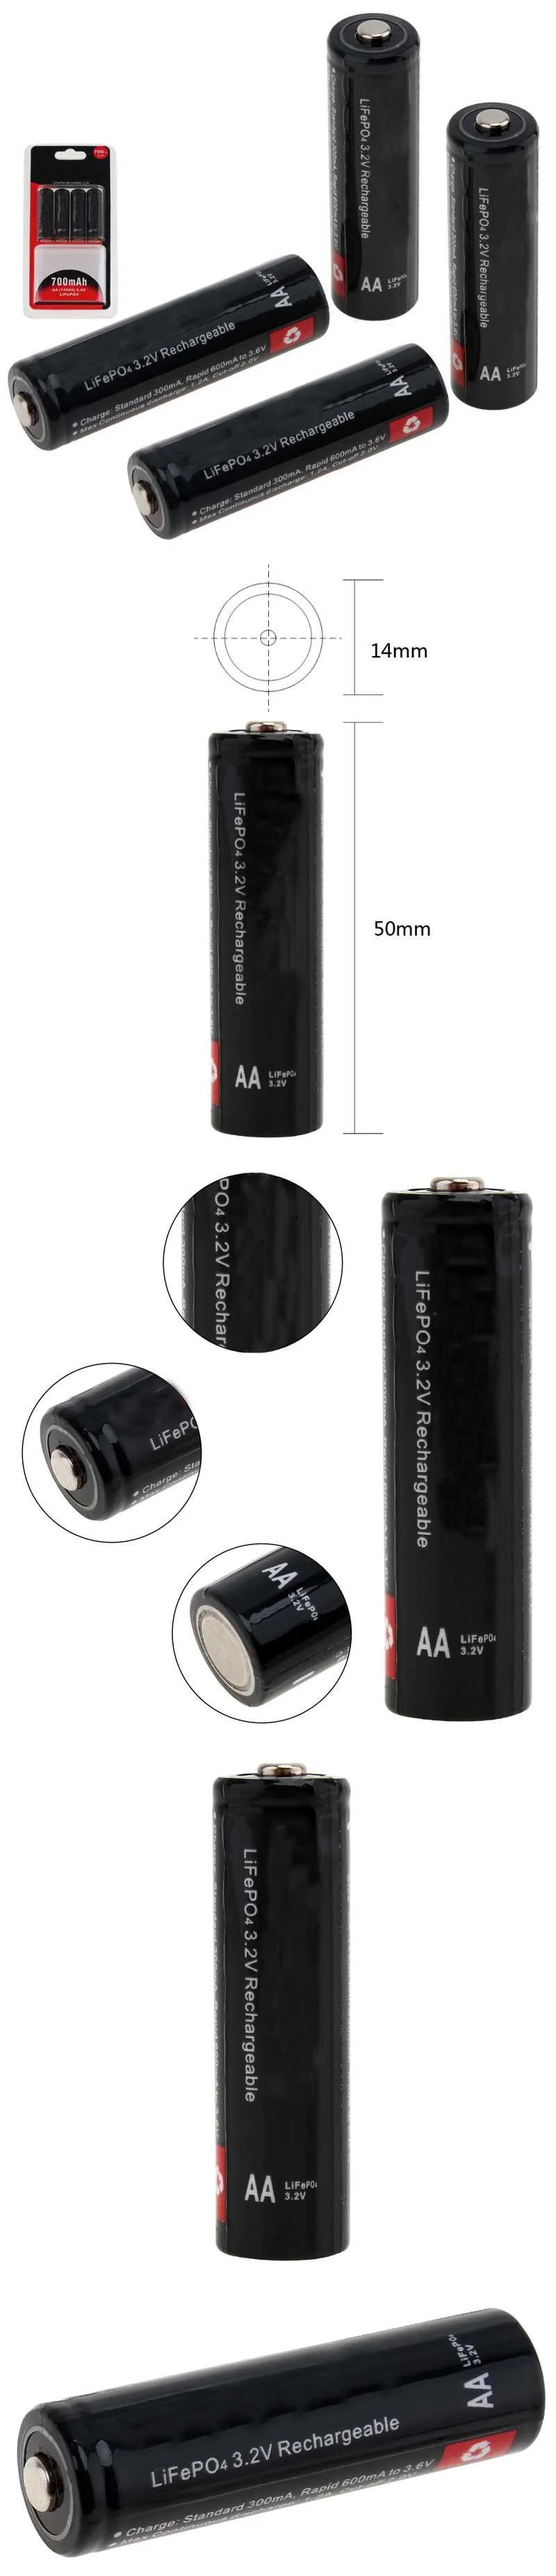 4 шт Soshine 3,2 v 700mah AA LiFePO4 с защитой от батарей высокого разряда 14500 перезаряжаемая AA батарея+ коробка